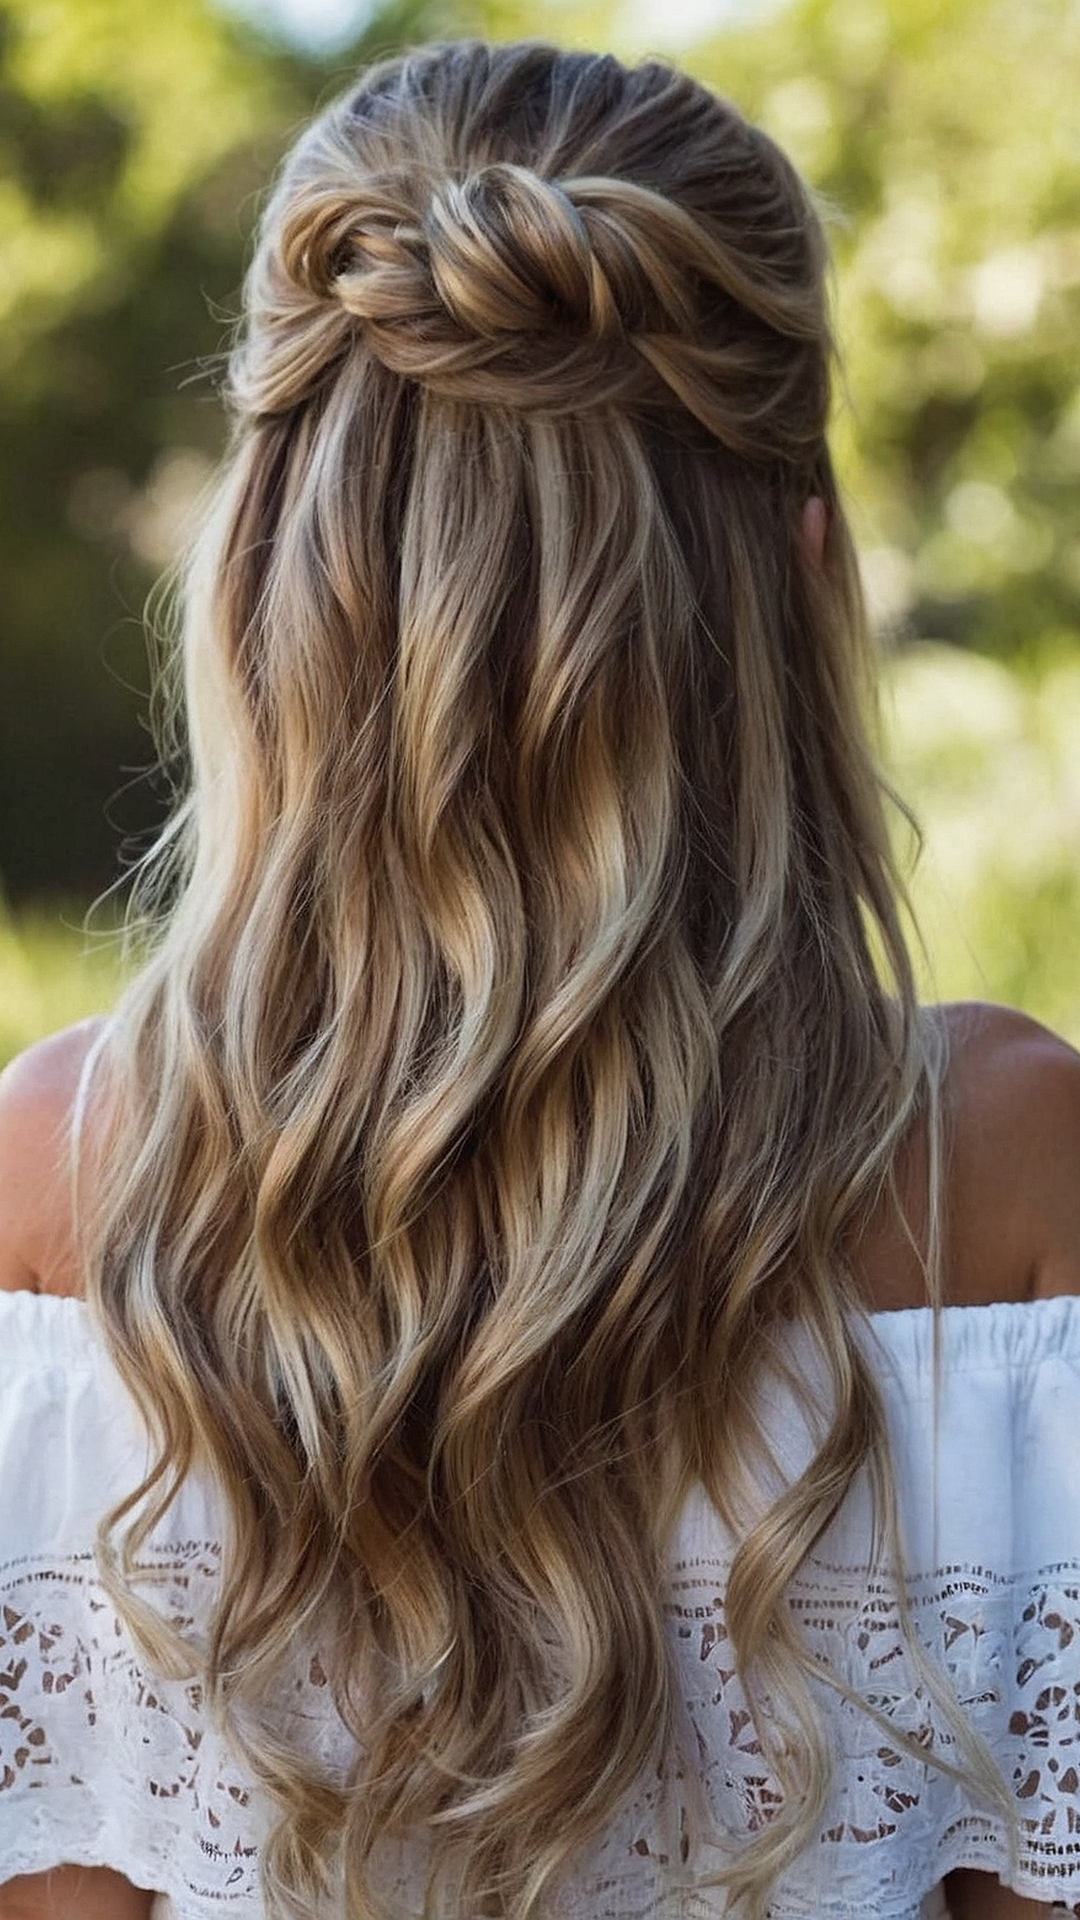 Tropical Tresses: Vibrant Summer Hair Ideas